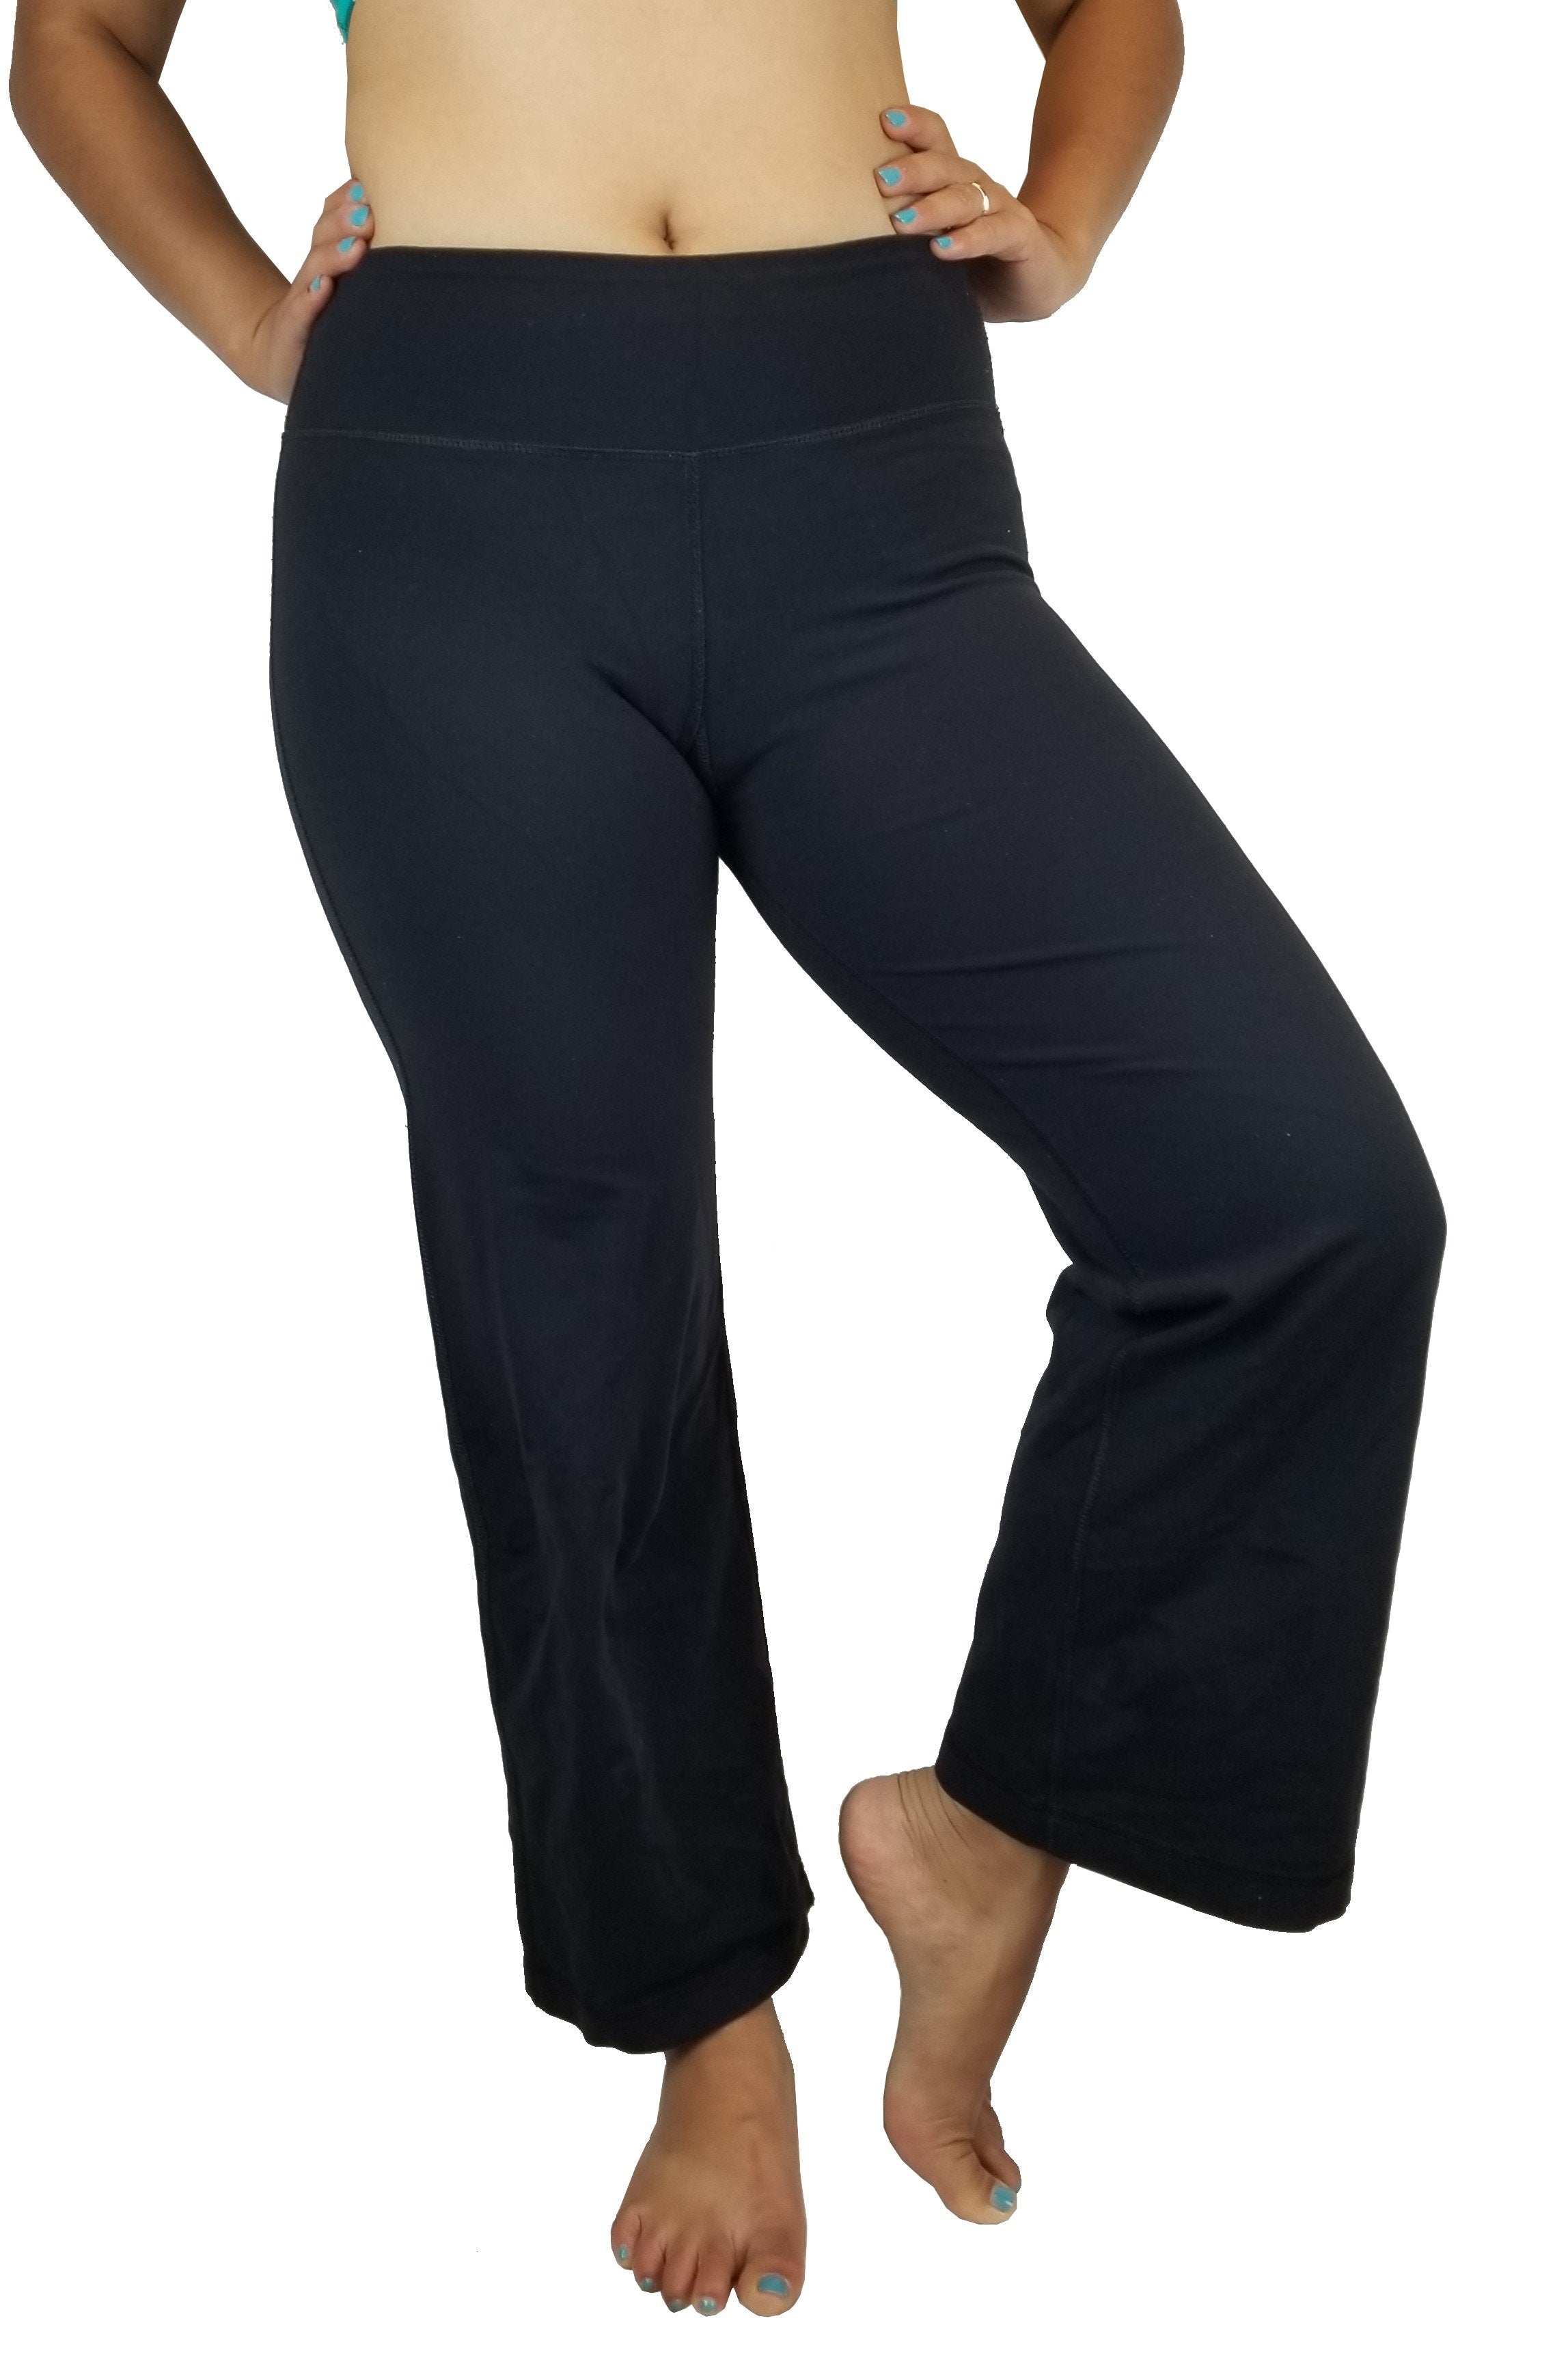 Spalding Women's Bootleg Yoga Pant, Black, Small Small, Black